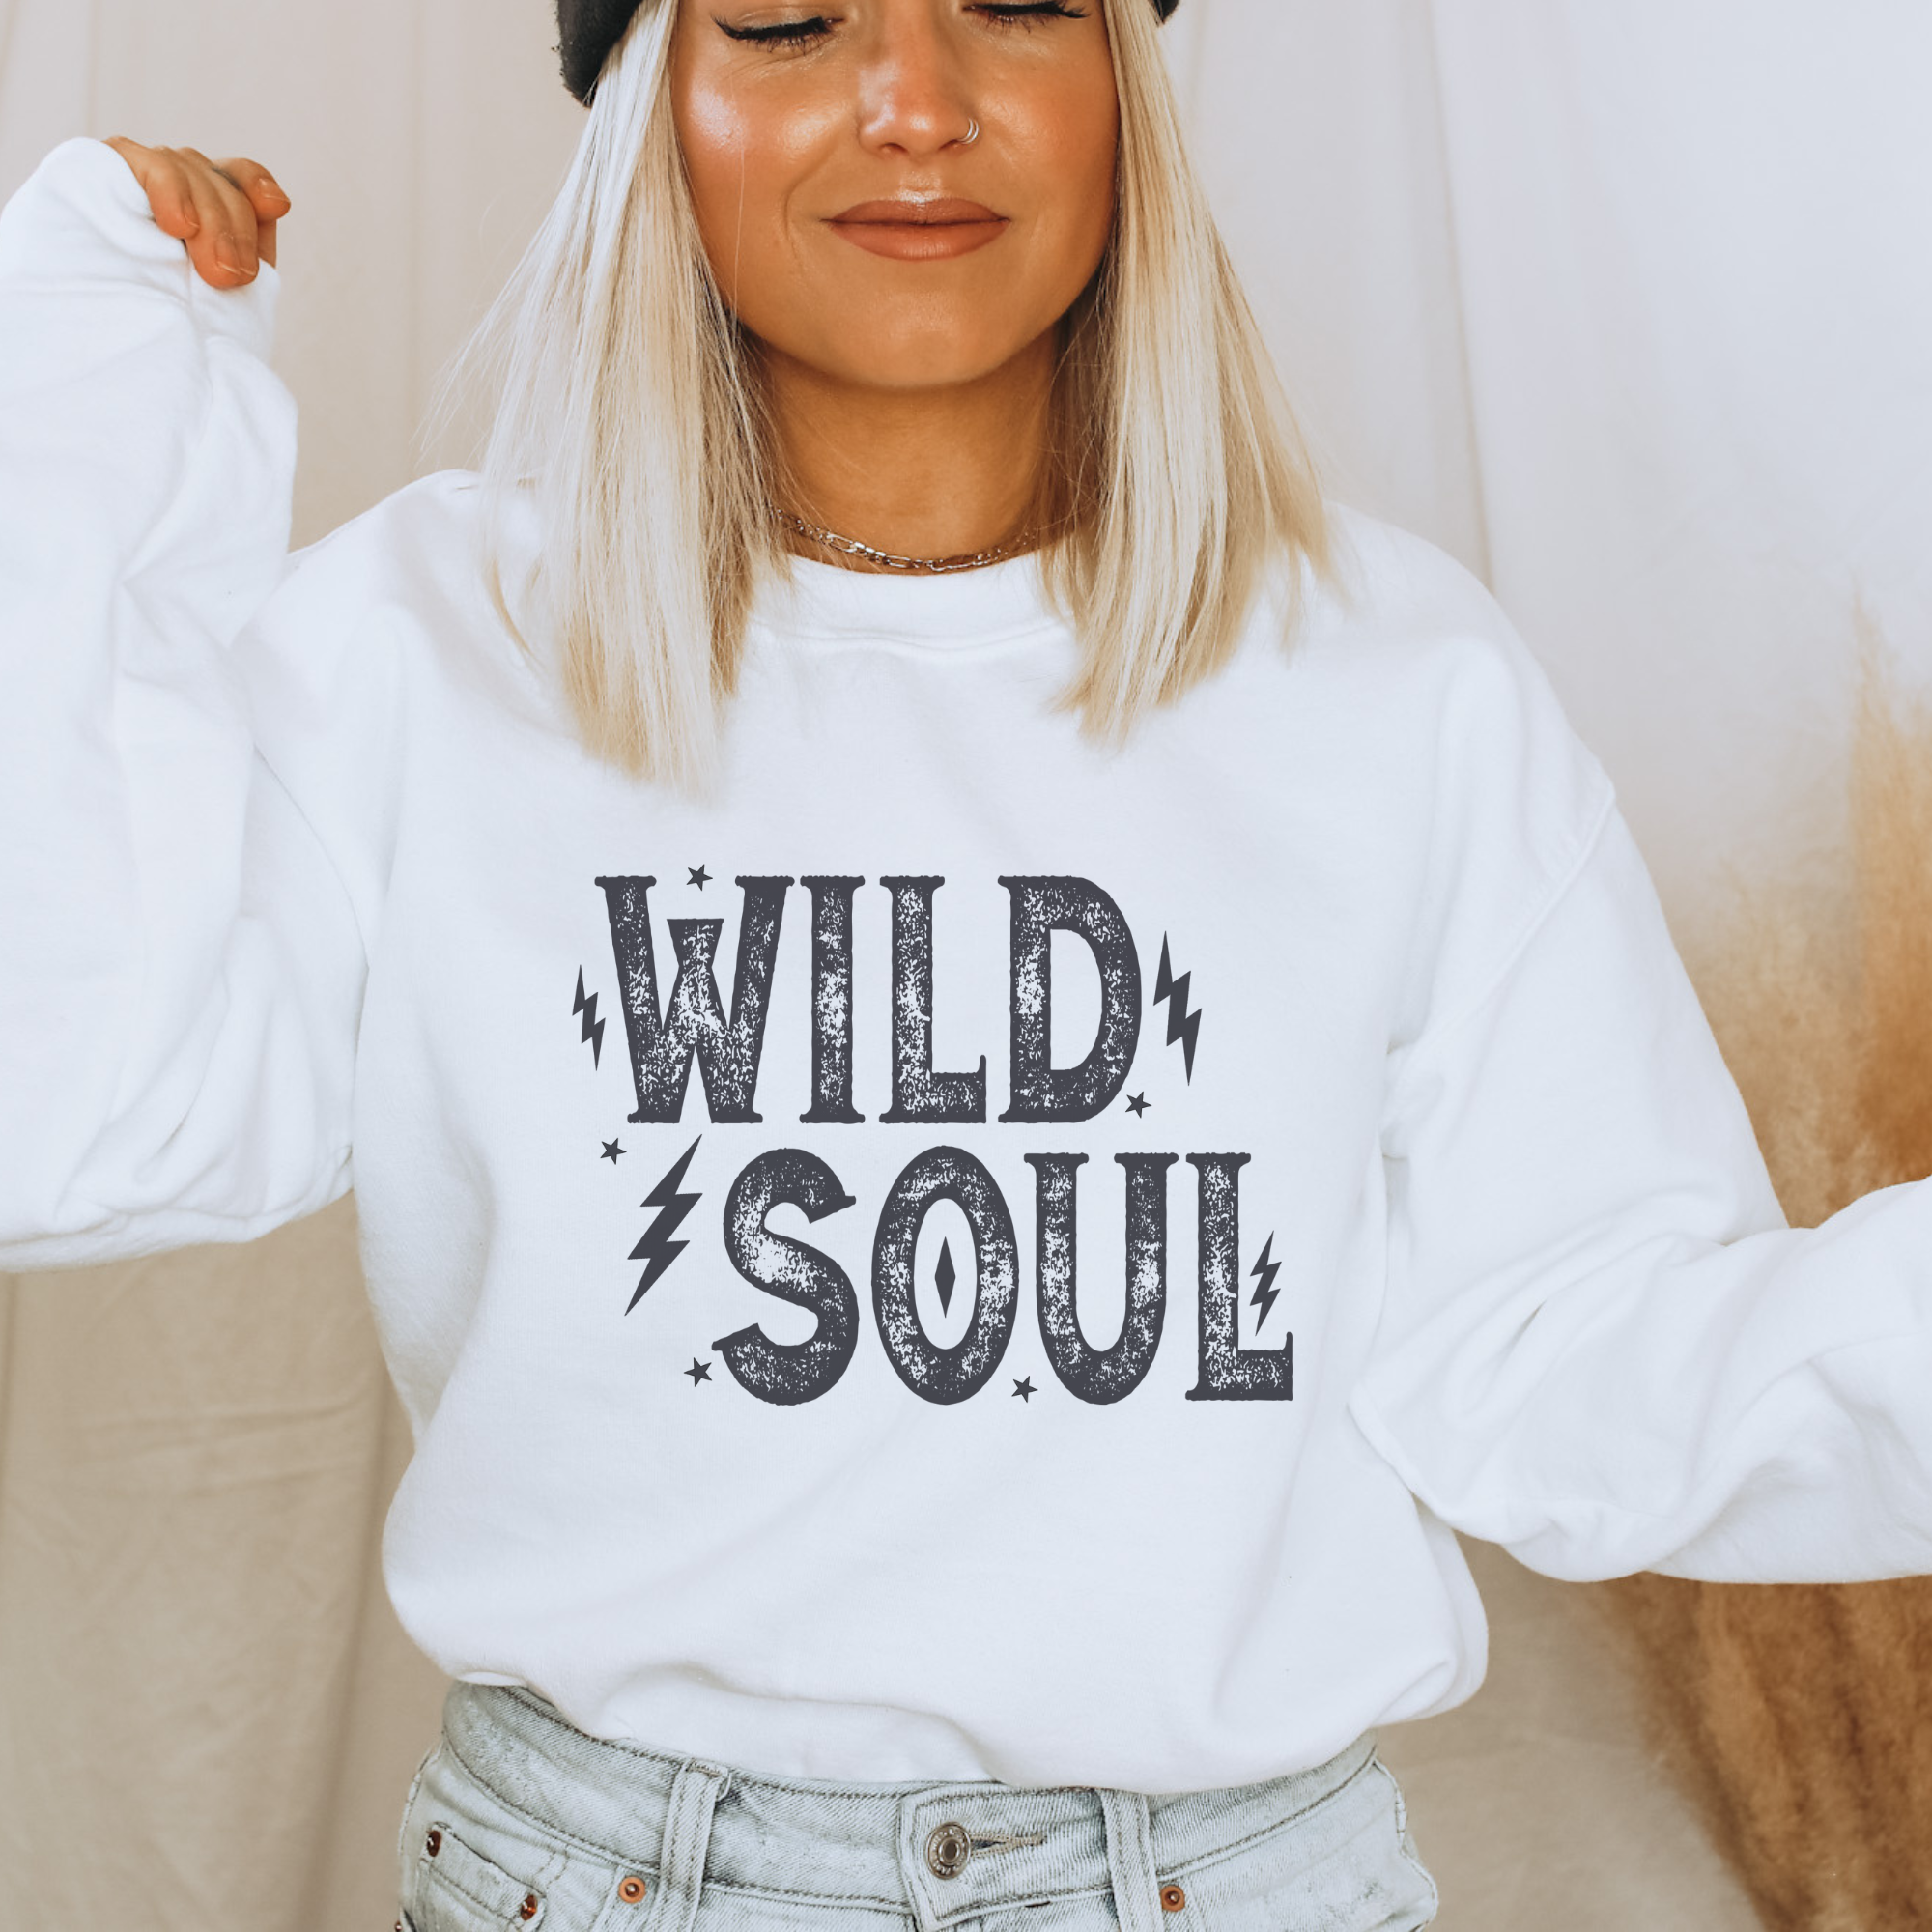 Distressed Wild Soul Western Crewneck Sweatshirt